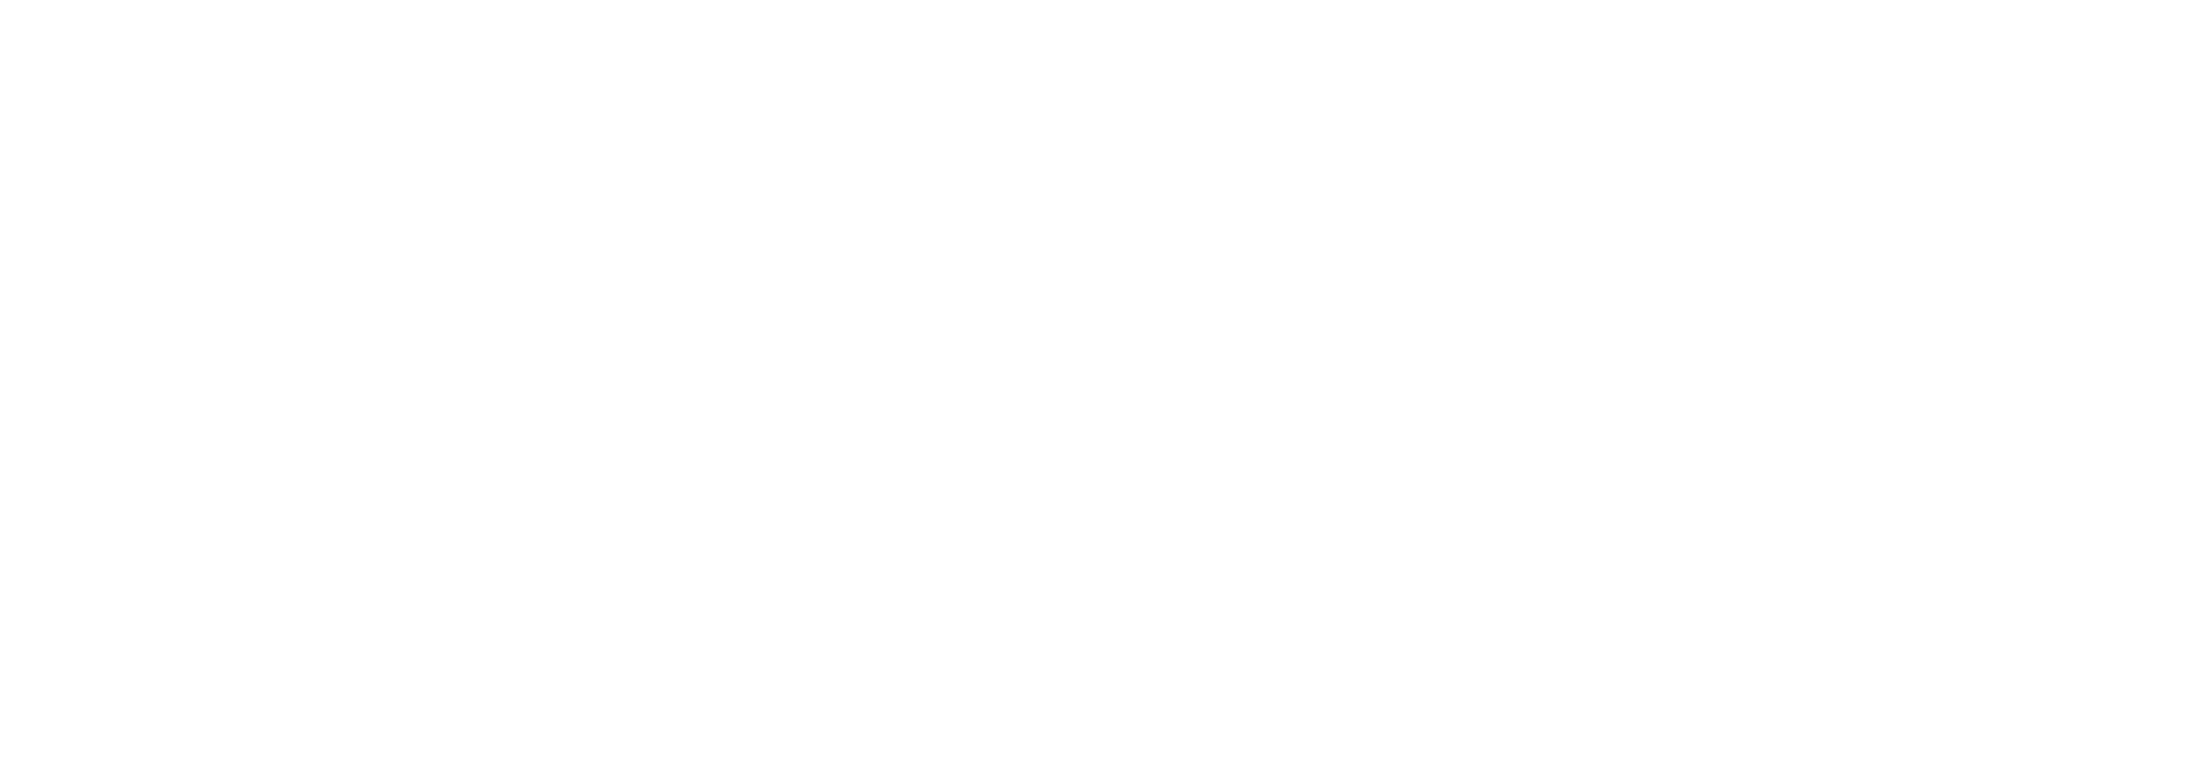 PowerofWork_logo_2